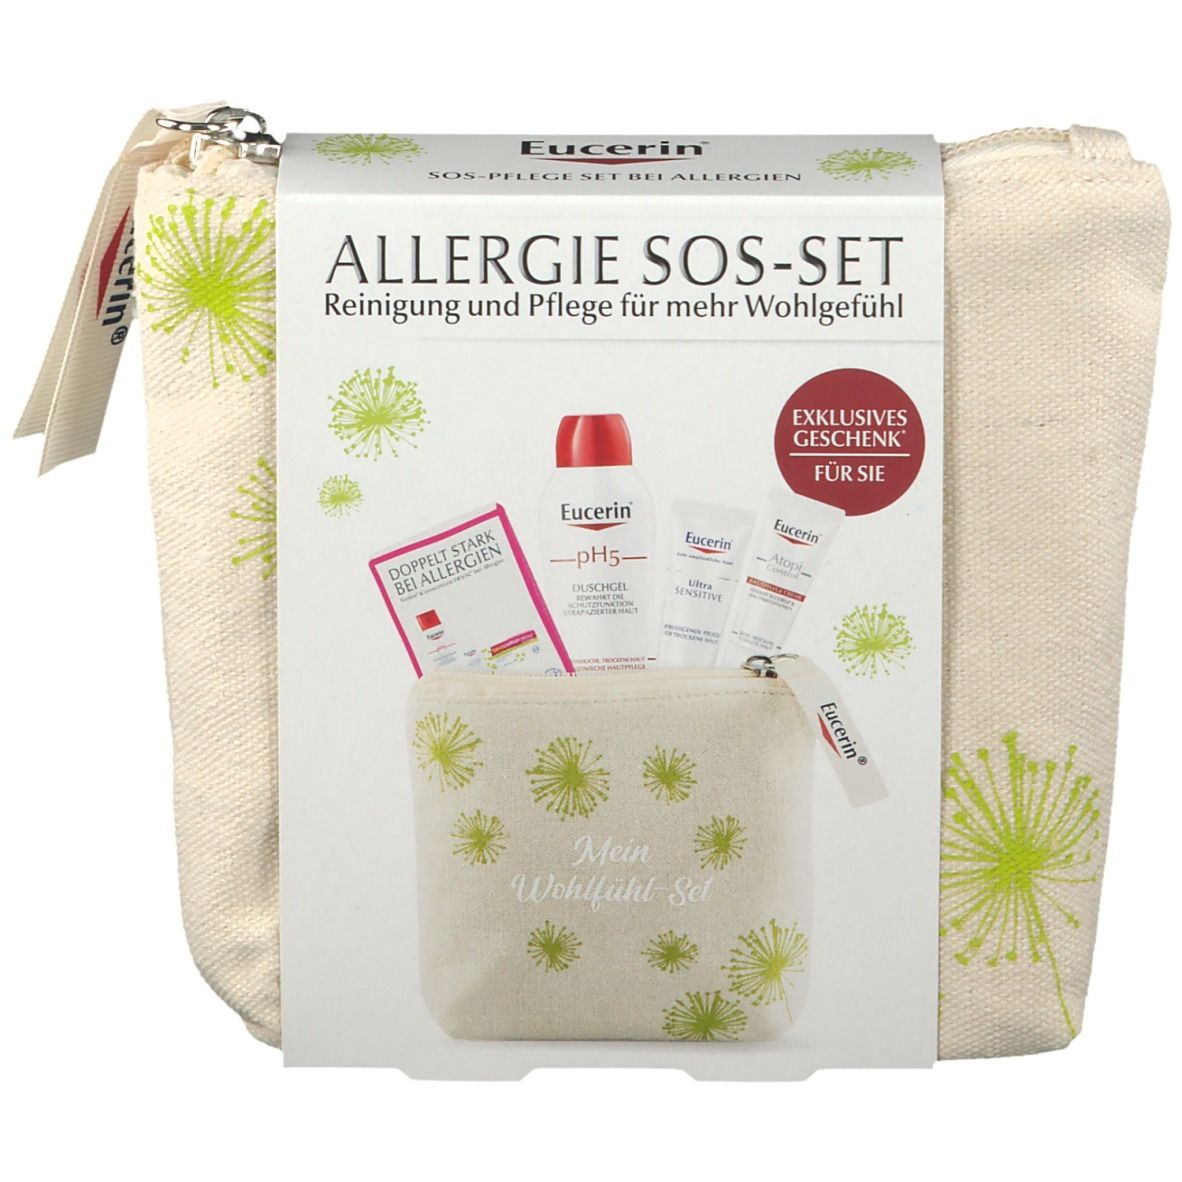 B. Allergie Miniset